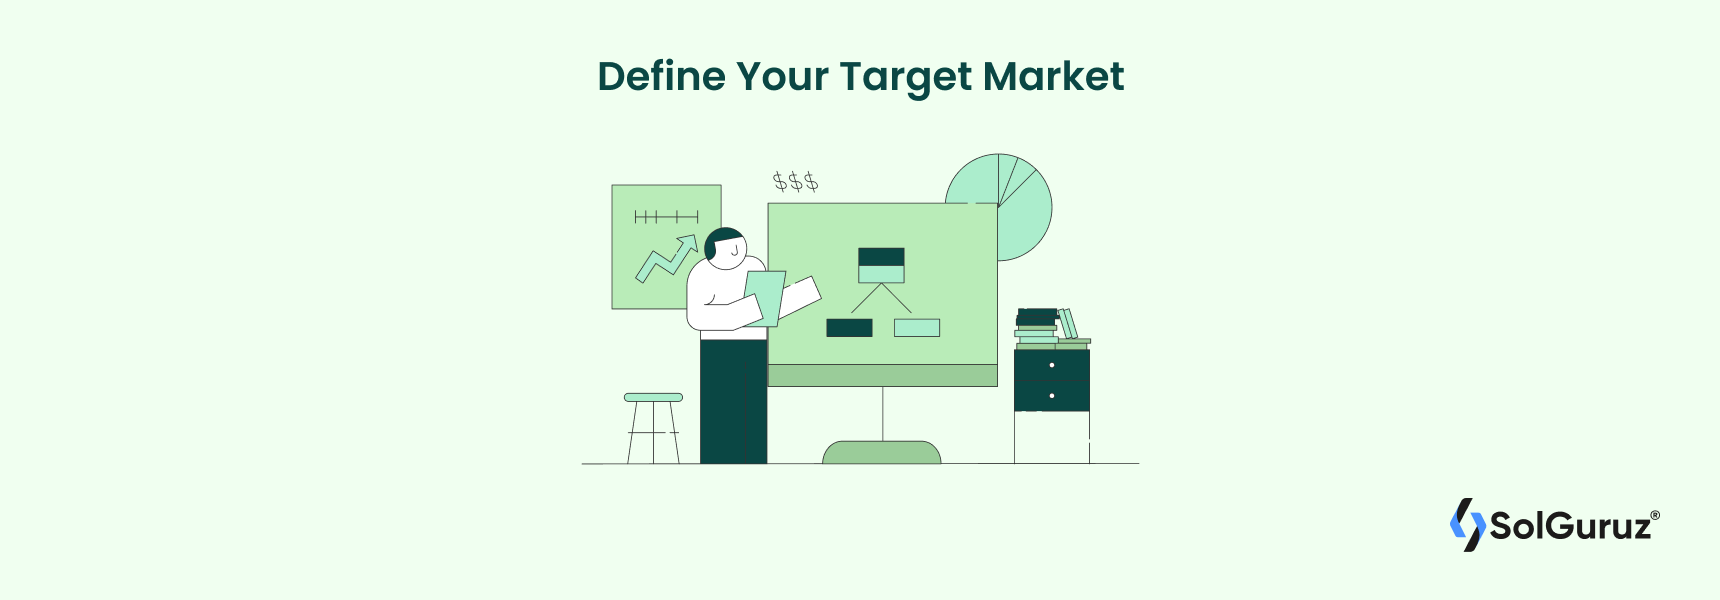 Define Your Target Market while building a MVP Version